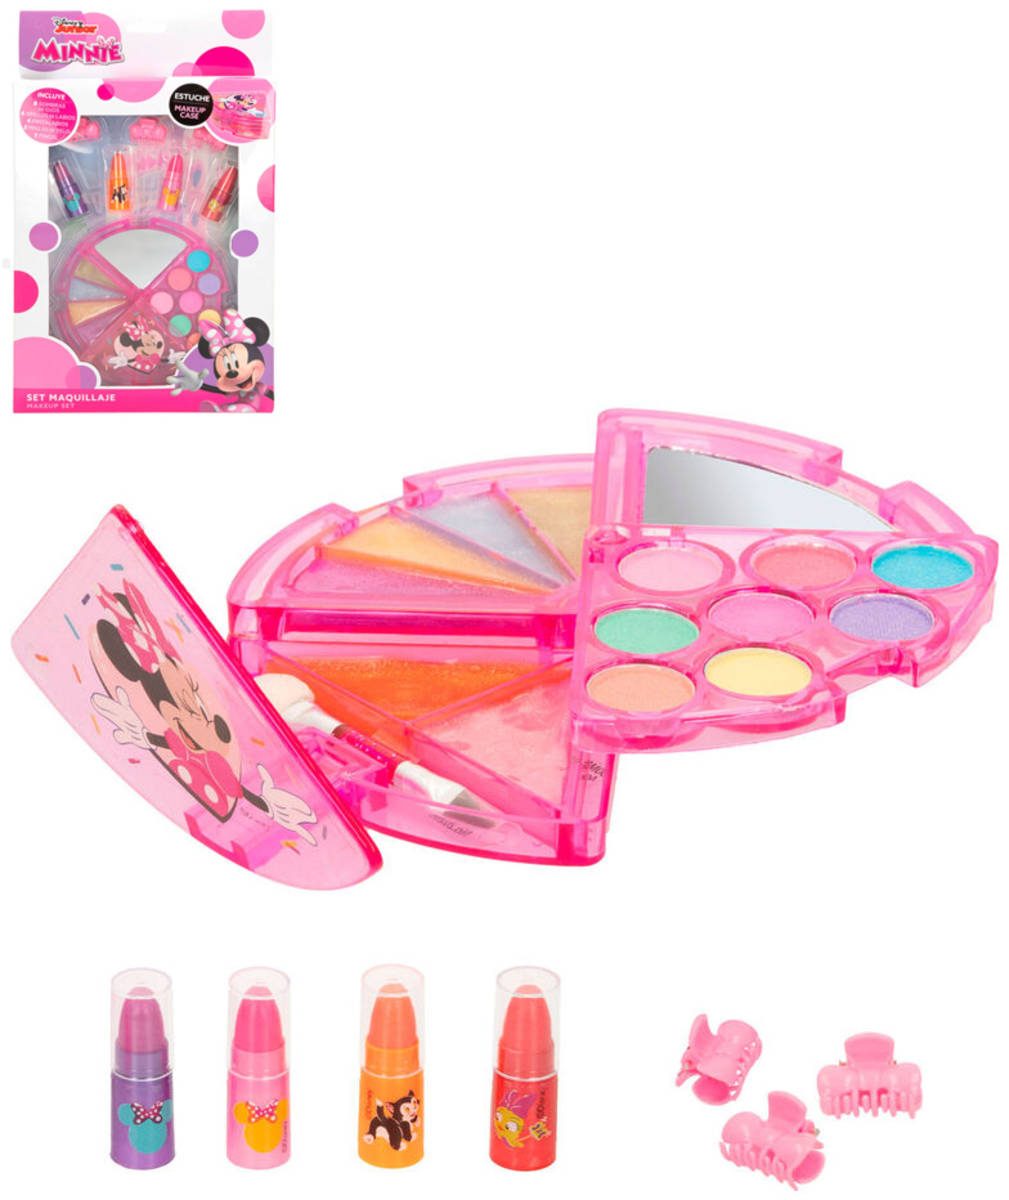 Fotografie Sada krásy make-up Disney Minnie Mouse 22ks dětské šminky v rozkládací krabici